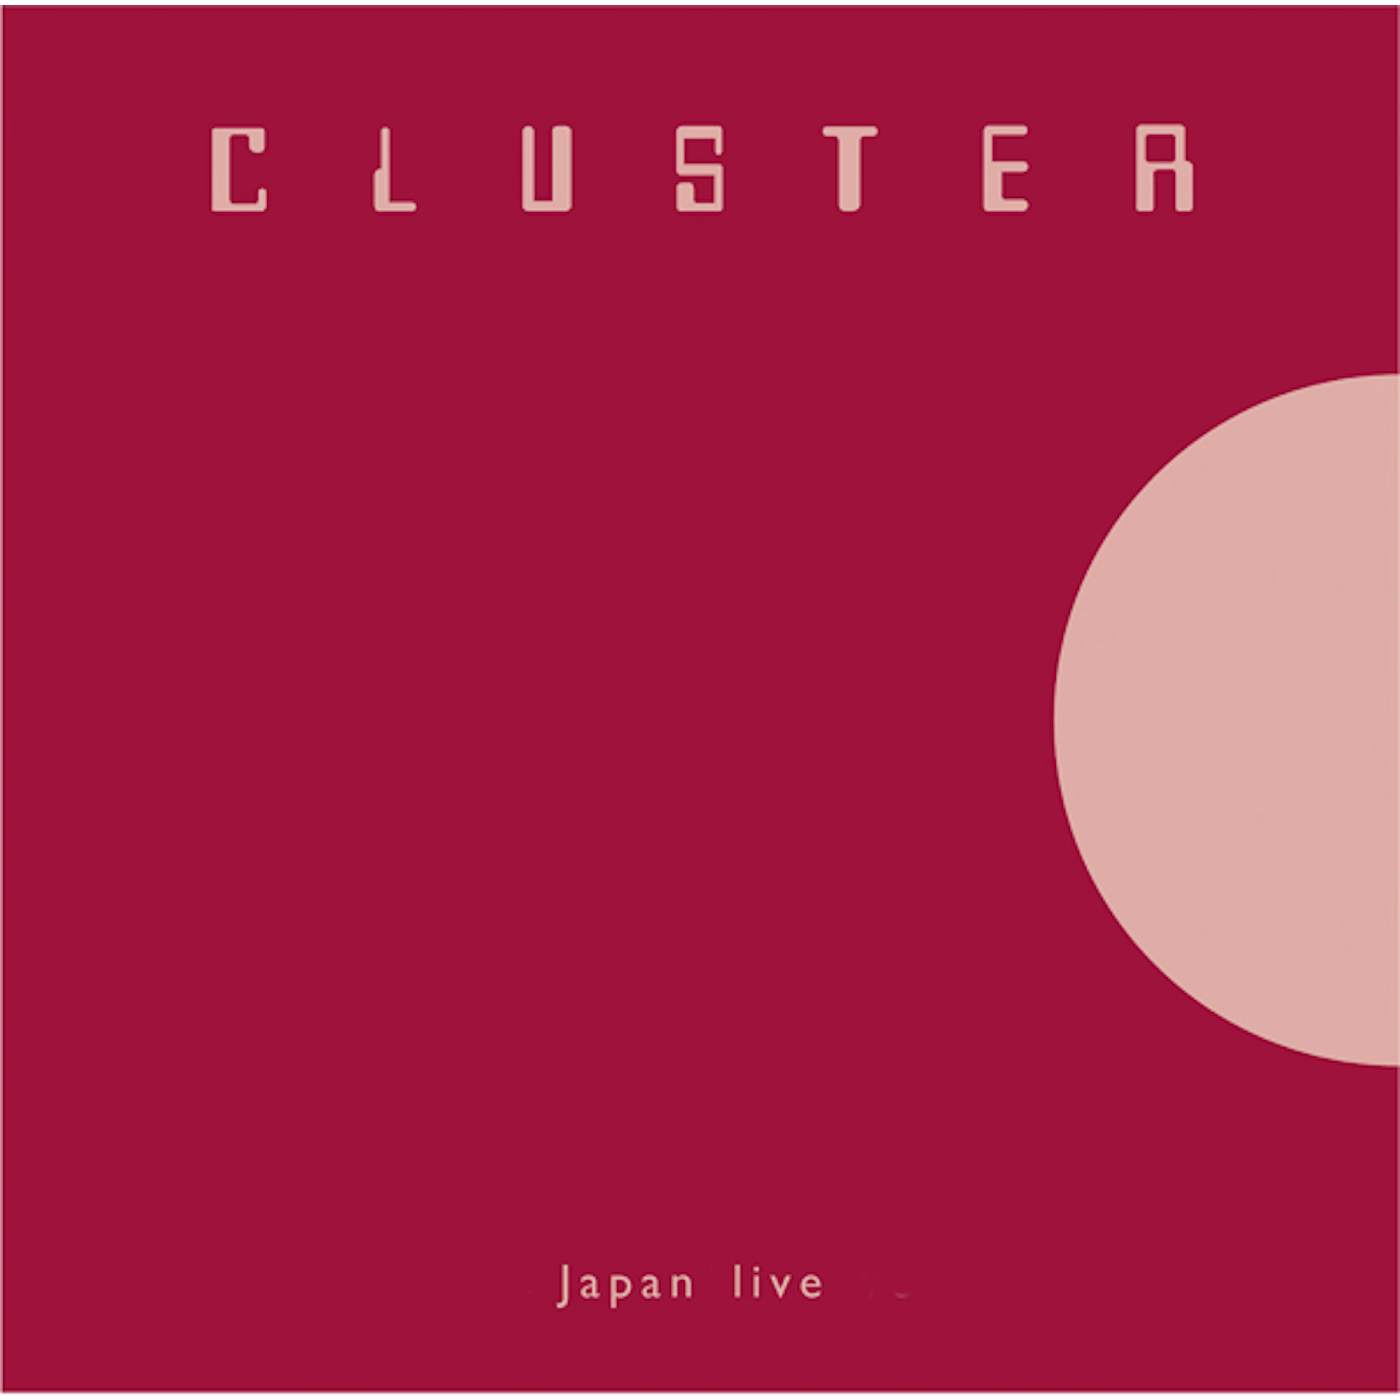 Cluster JAPAN LIVE Vinyl Record